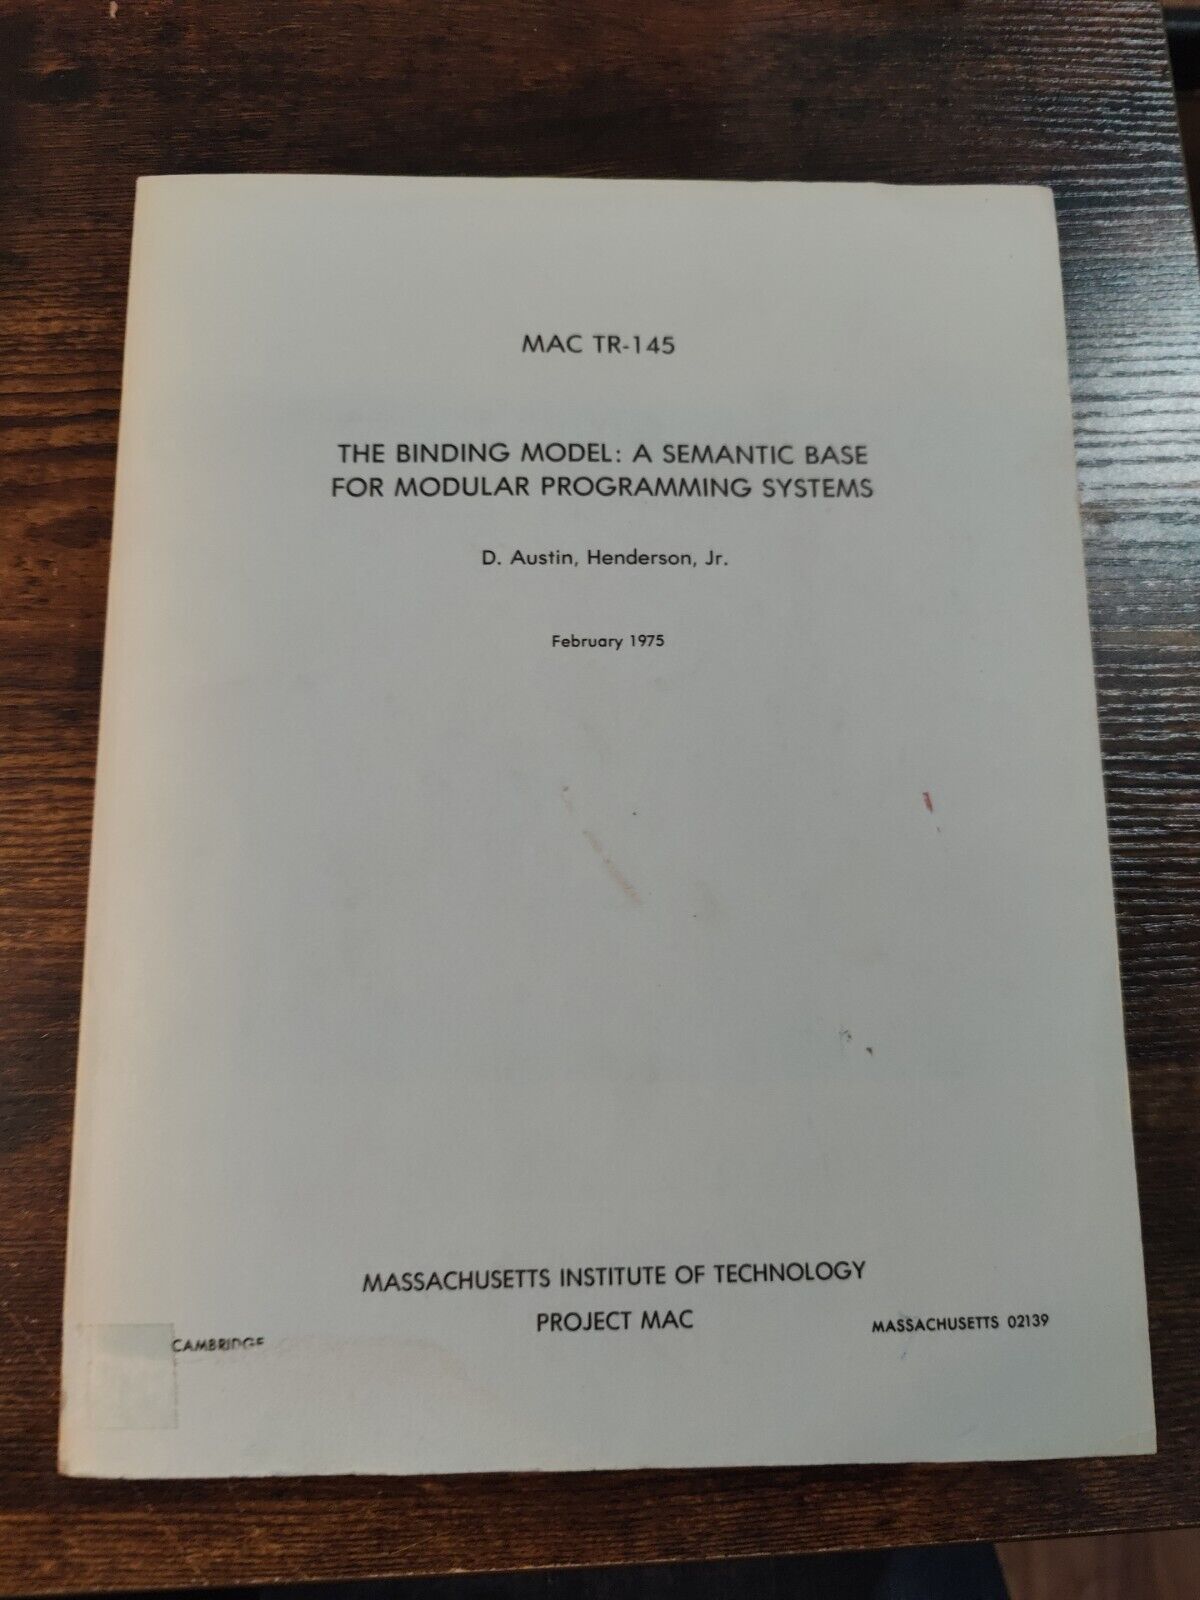 1975 Vintage MIT Project MAC Programming Book: The Binding Model MAC TR-145